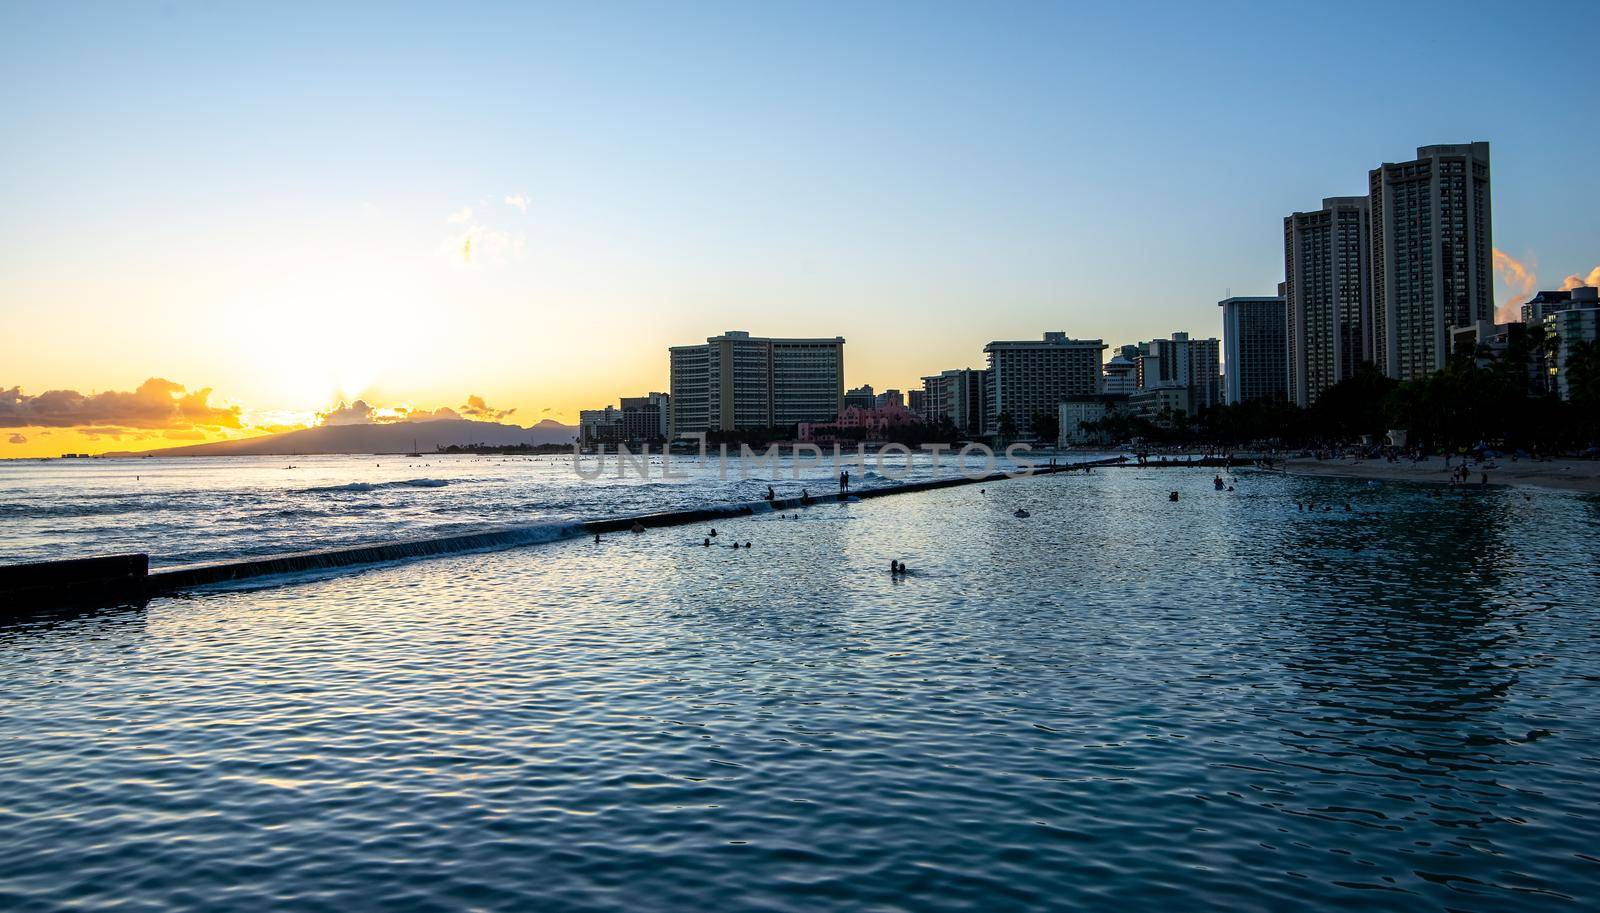 Ocean Water, Waikiki Beach, and Hotel Towers